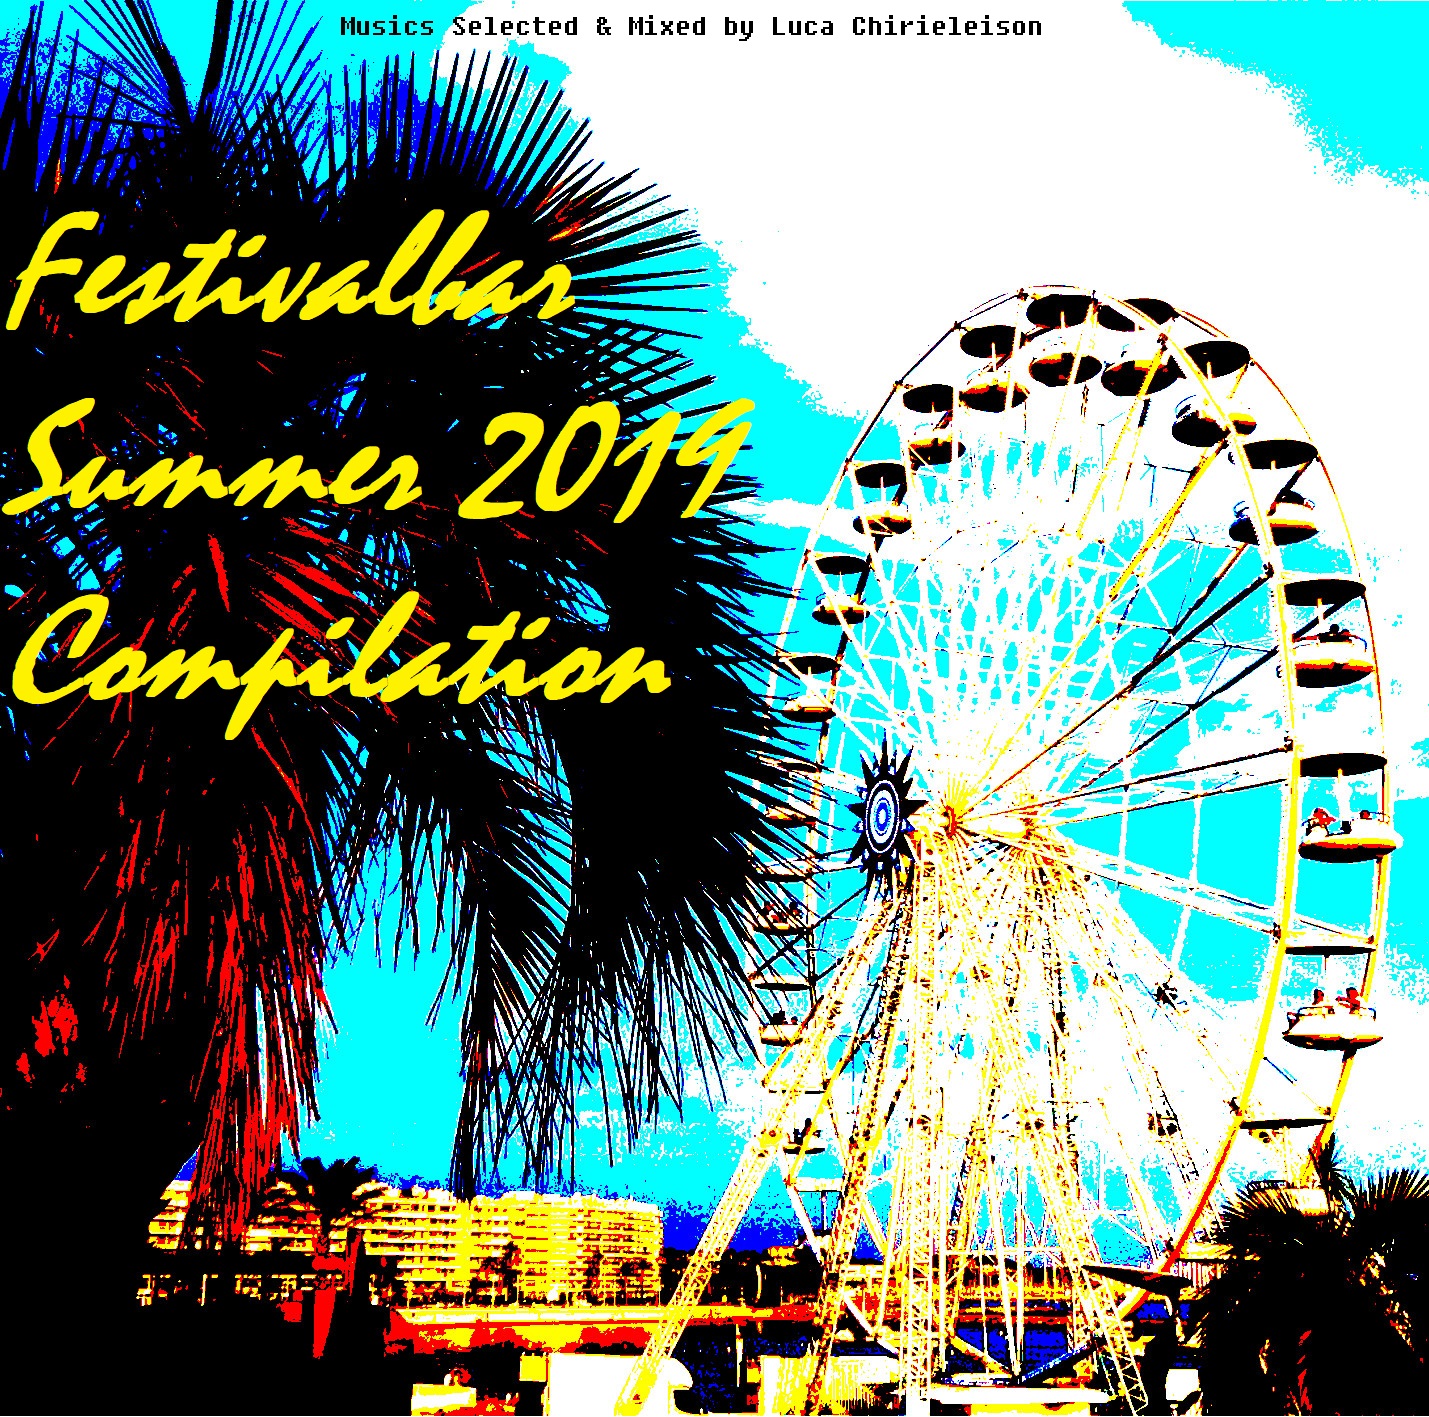 Festivalbar Summer 2019 Compilation - Cover